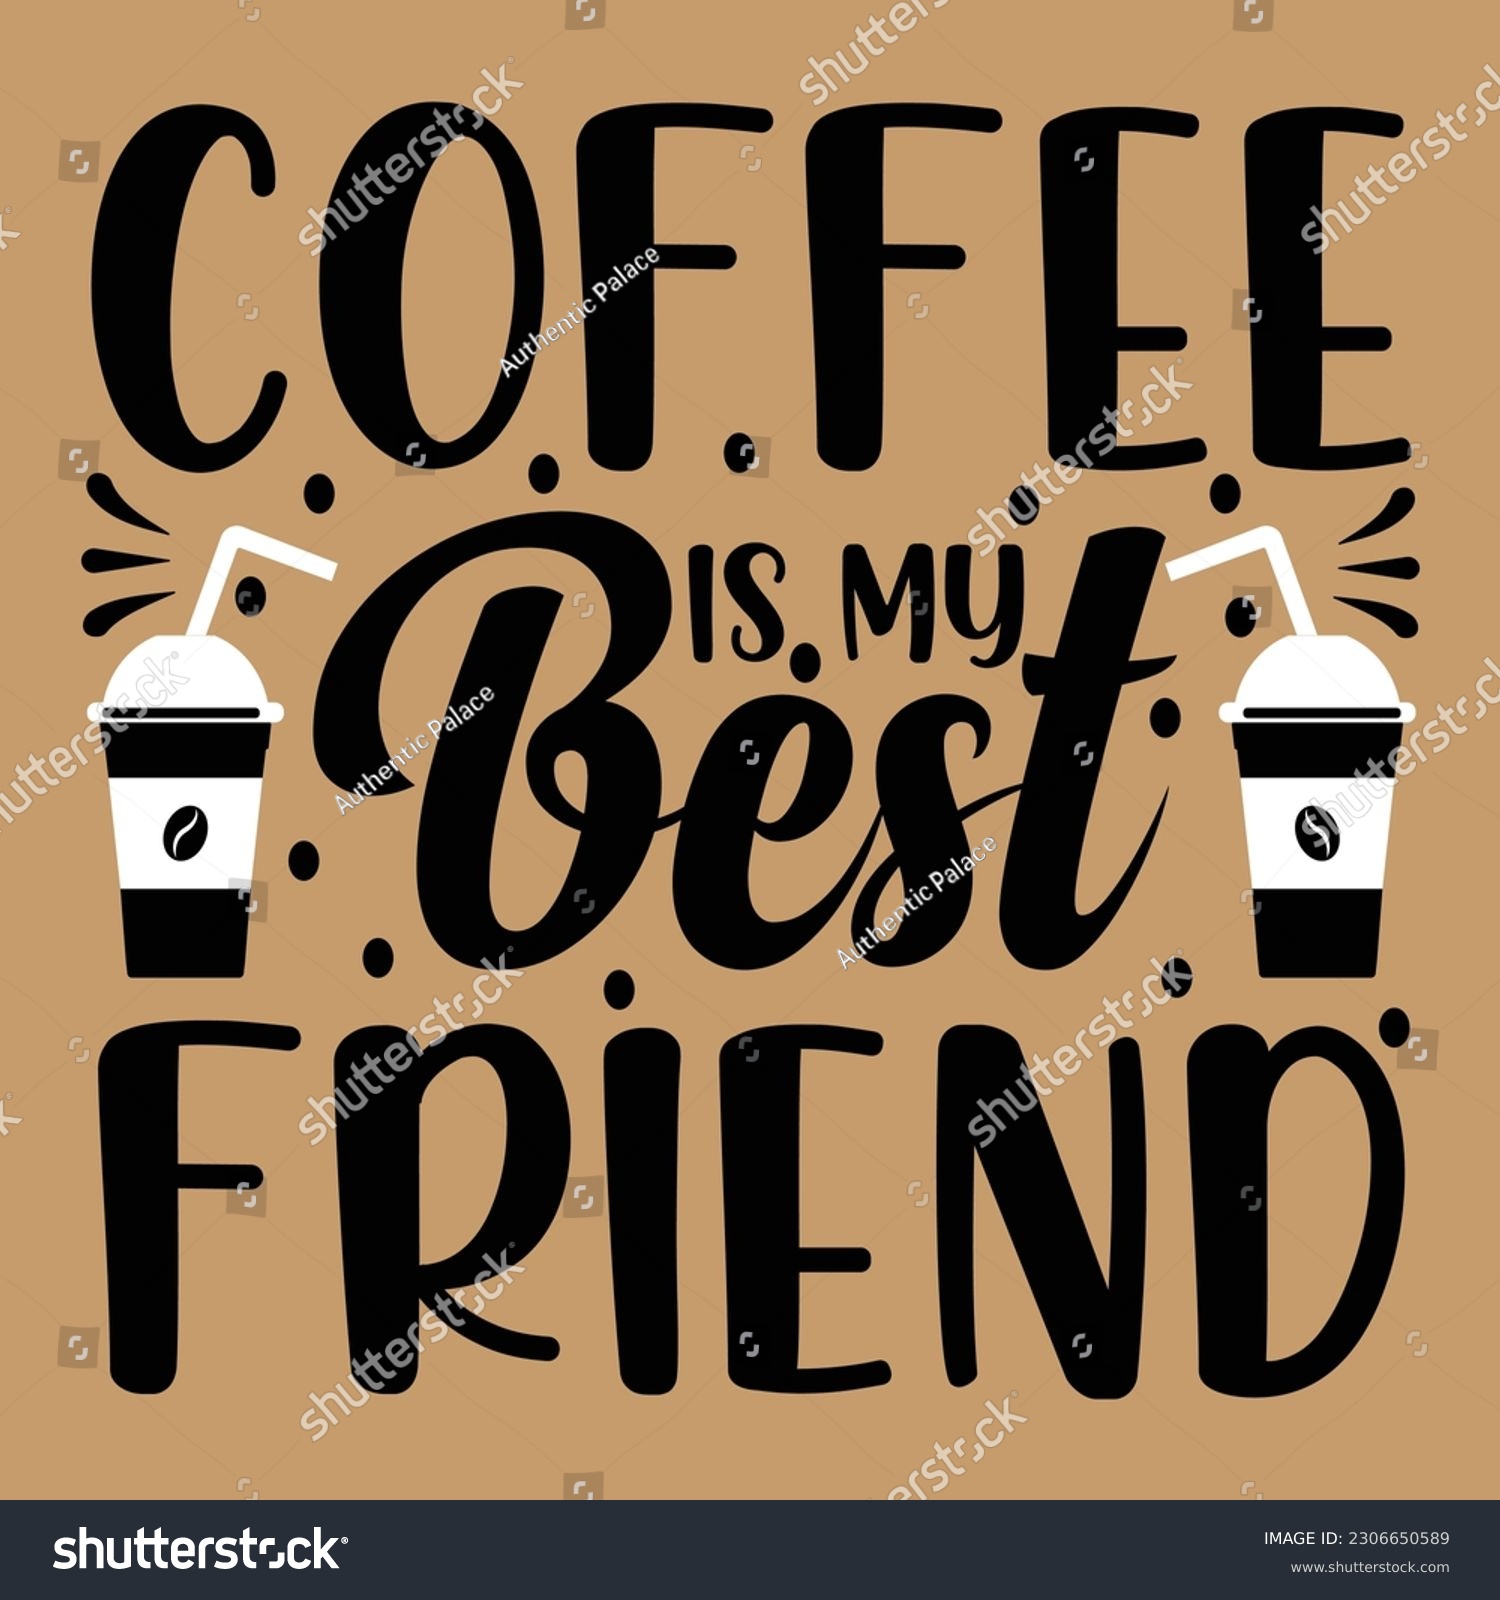 SVG of coffee is my best friend,svg tshirt design bundle, coffee svg t shirt design,design for print on demand, coffee T-shirt Design, Typography Print,Modern coffee typography  t dhirt design for print,
 svg